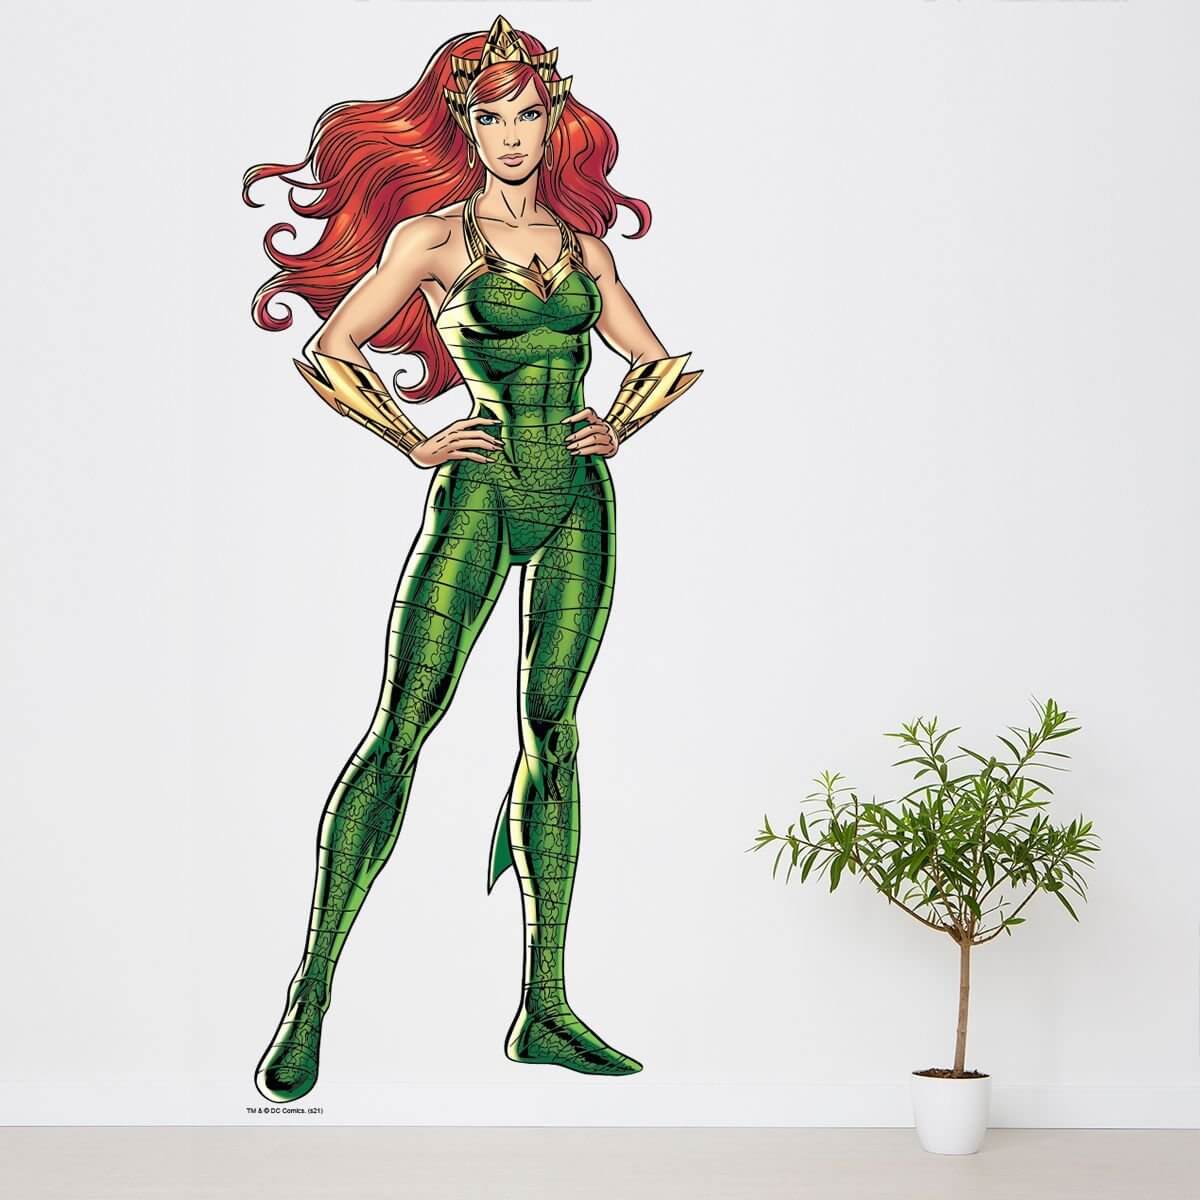 Kismet Decals Mera Queen of Atlantis Licensed Wall Sticker - Easy DIY Justice League Home & Room Decor Wall Art - Kismet Decals